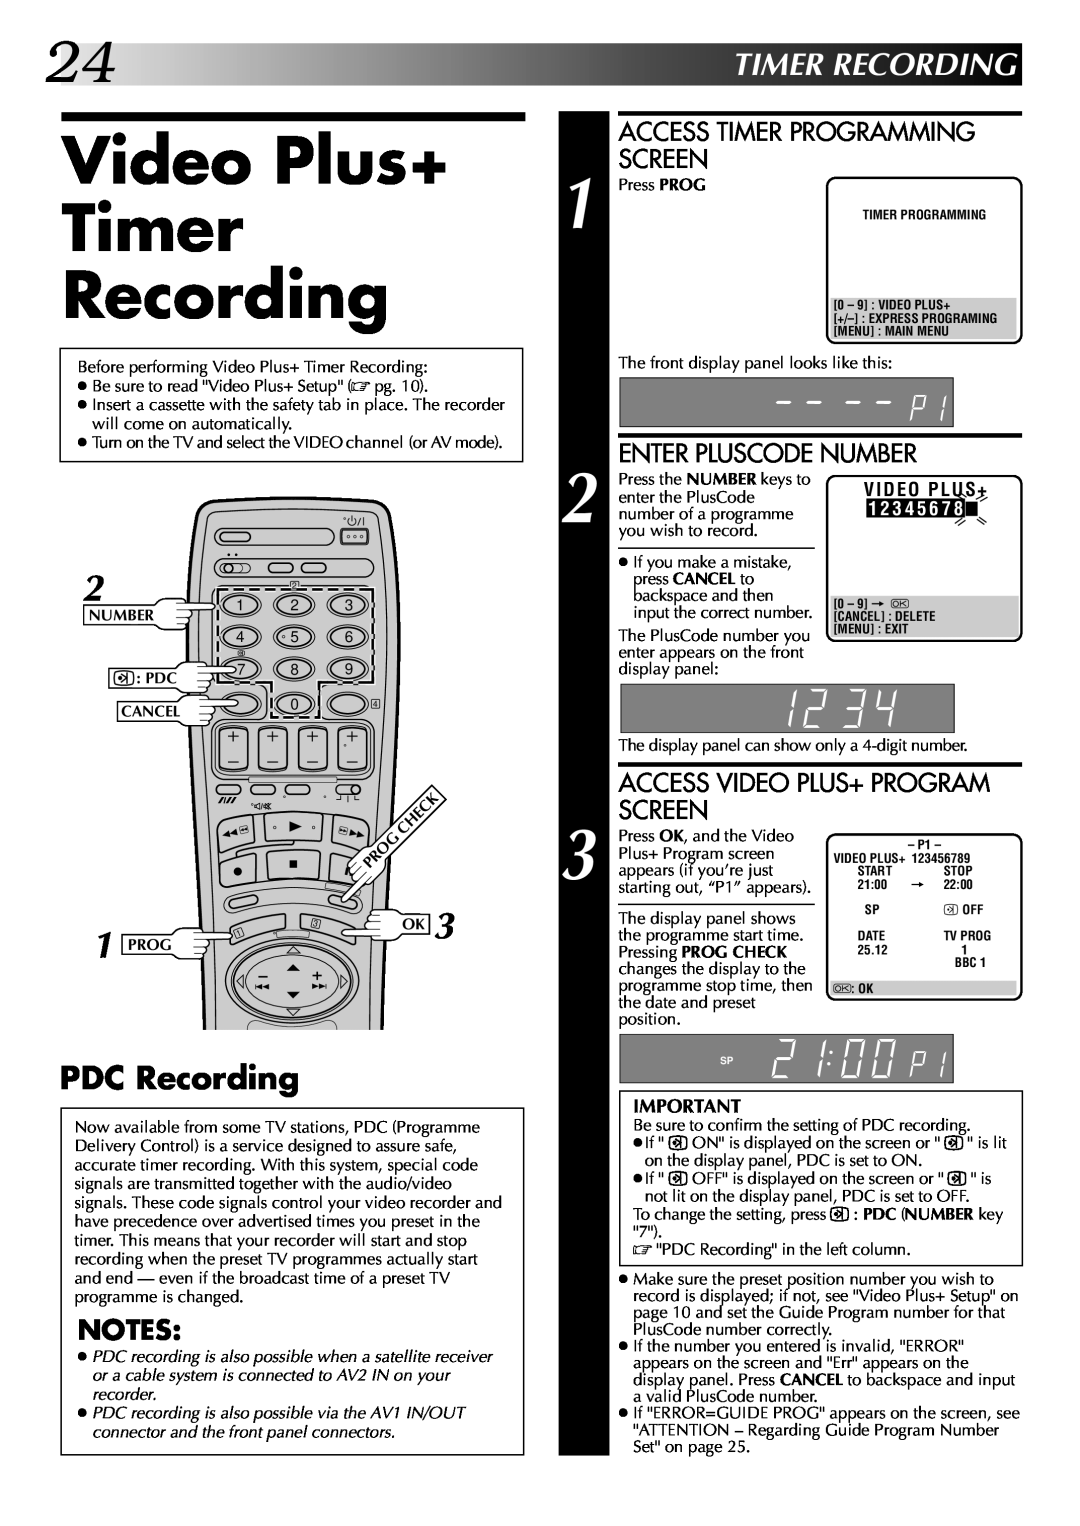 JVC HR-DD845EK Video Plus+ Timer Recording, Timerrecording, PDC Recording, Access Timer Programming Screen, Video Plu S + 